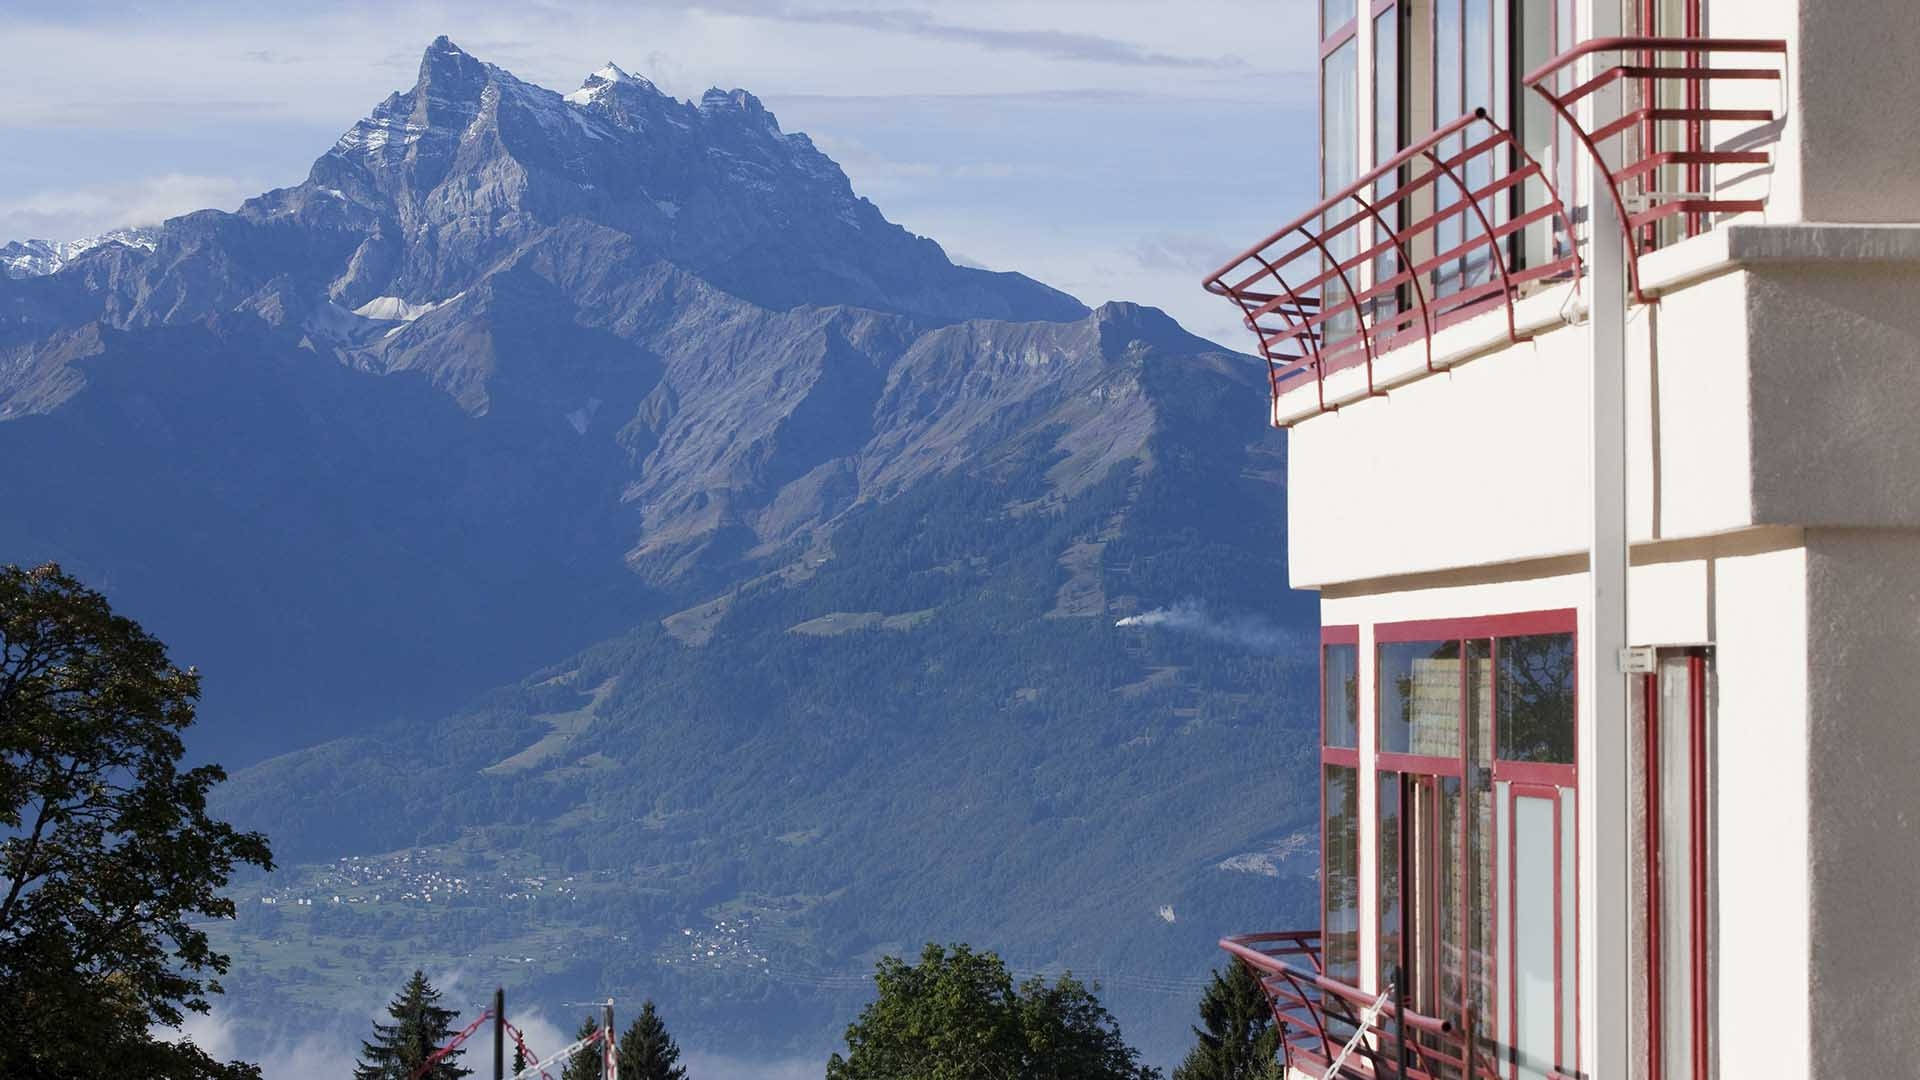 Collège Alpin International Beau Soleil - slide